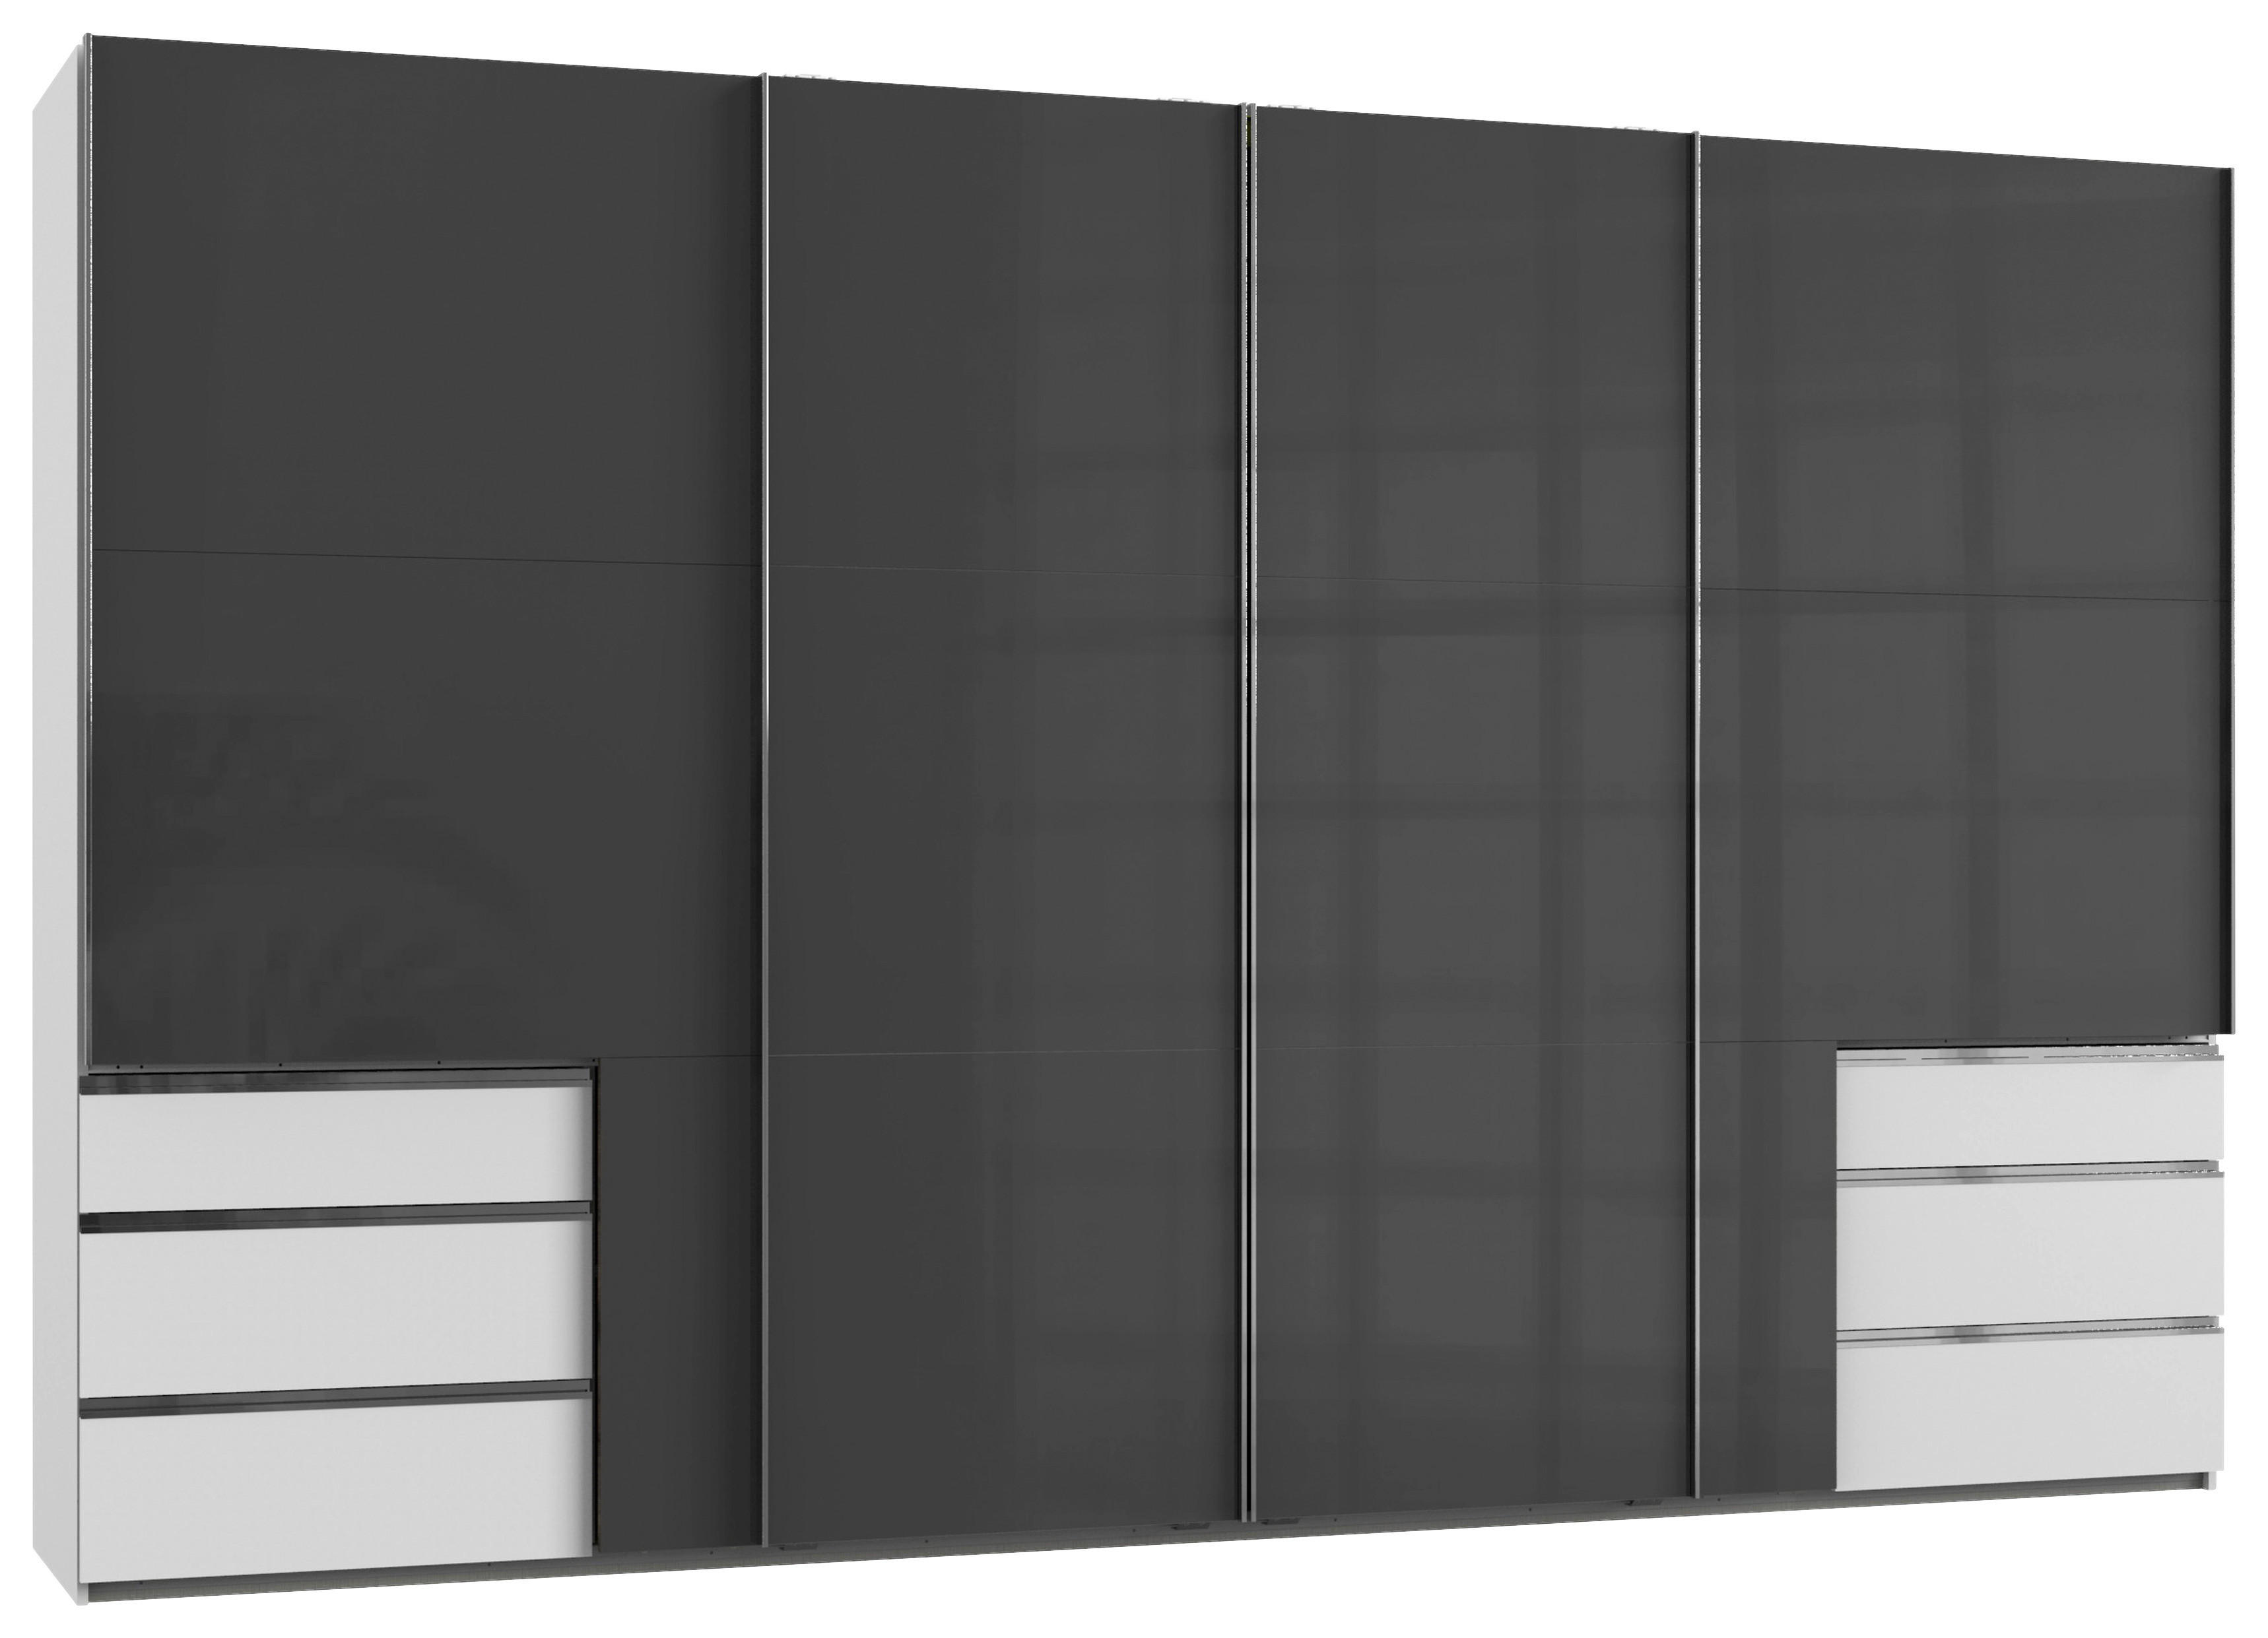 SCHWEBETÜRENSCHRANK 4-türig Grau, Weiß  - Chromfarben/Weiß, MODERN (300/216/65cm) - MID.YOU